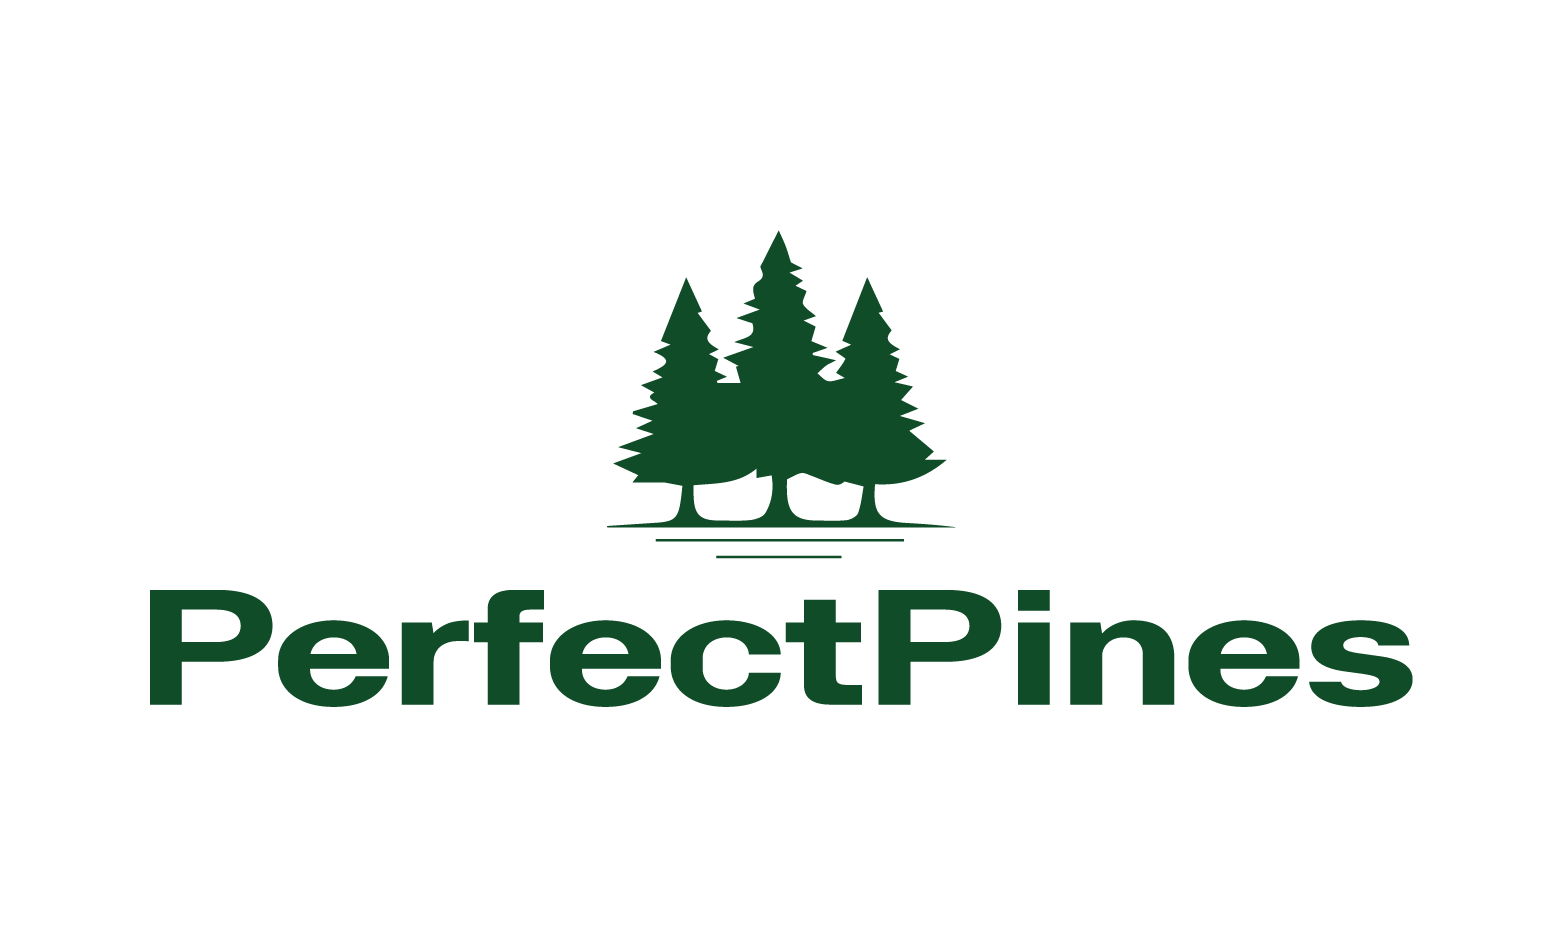 PerfectPines.com - Creative brandable domain for sale